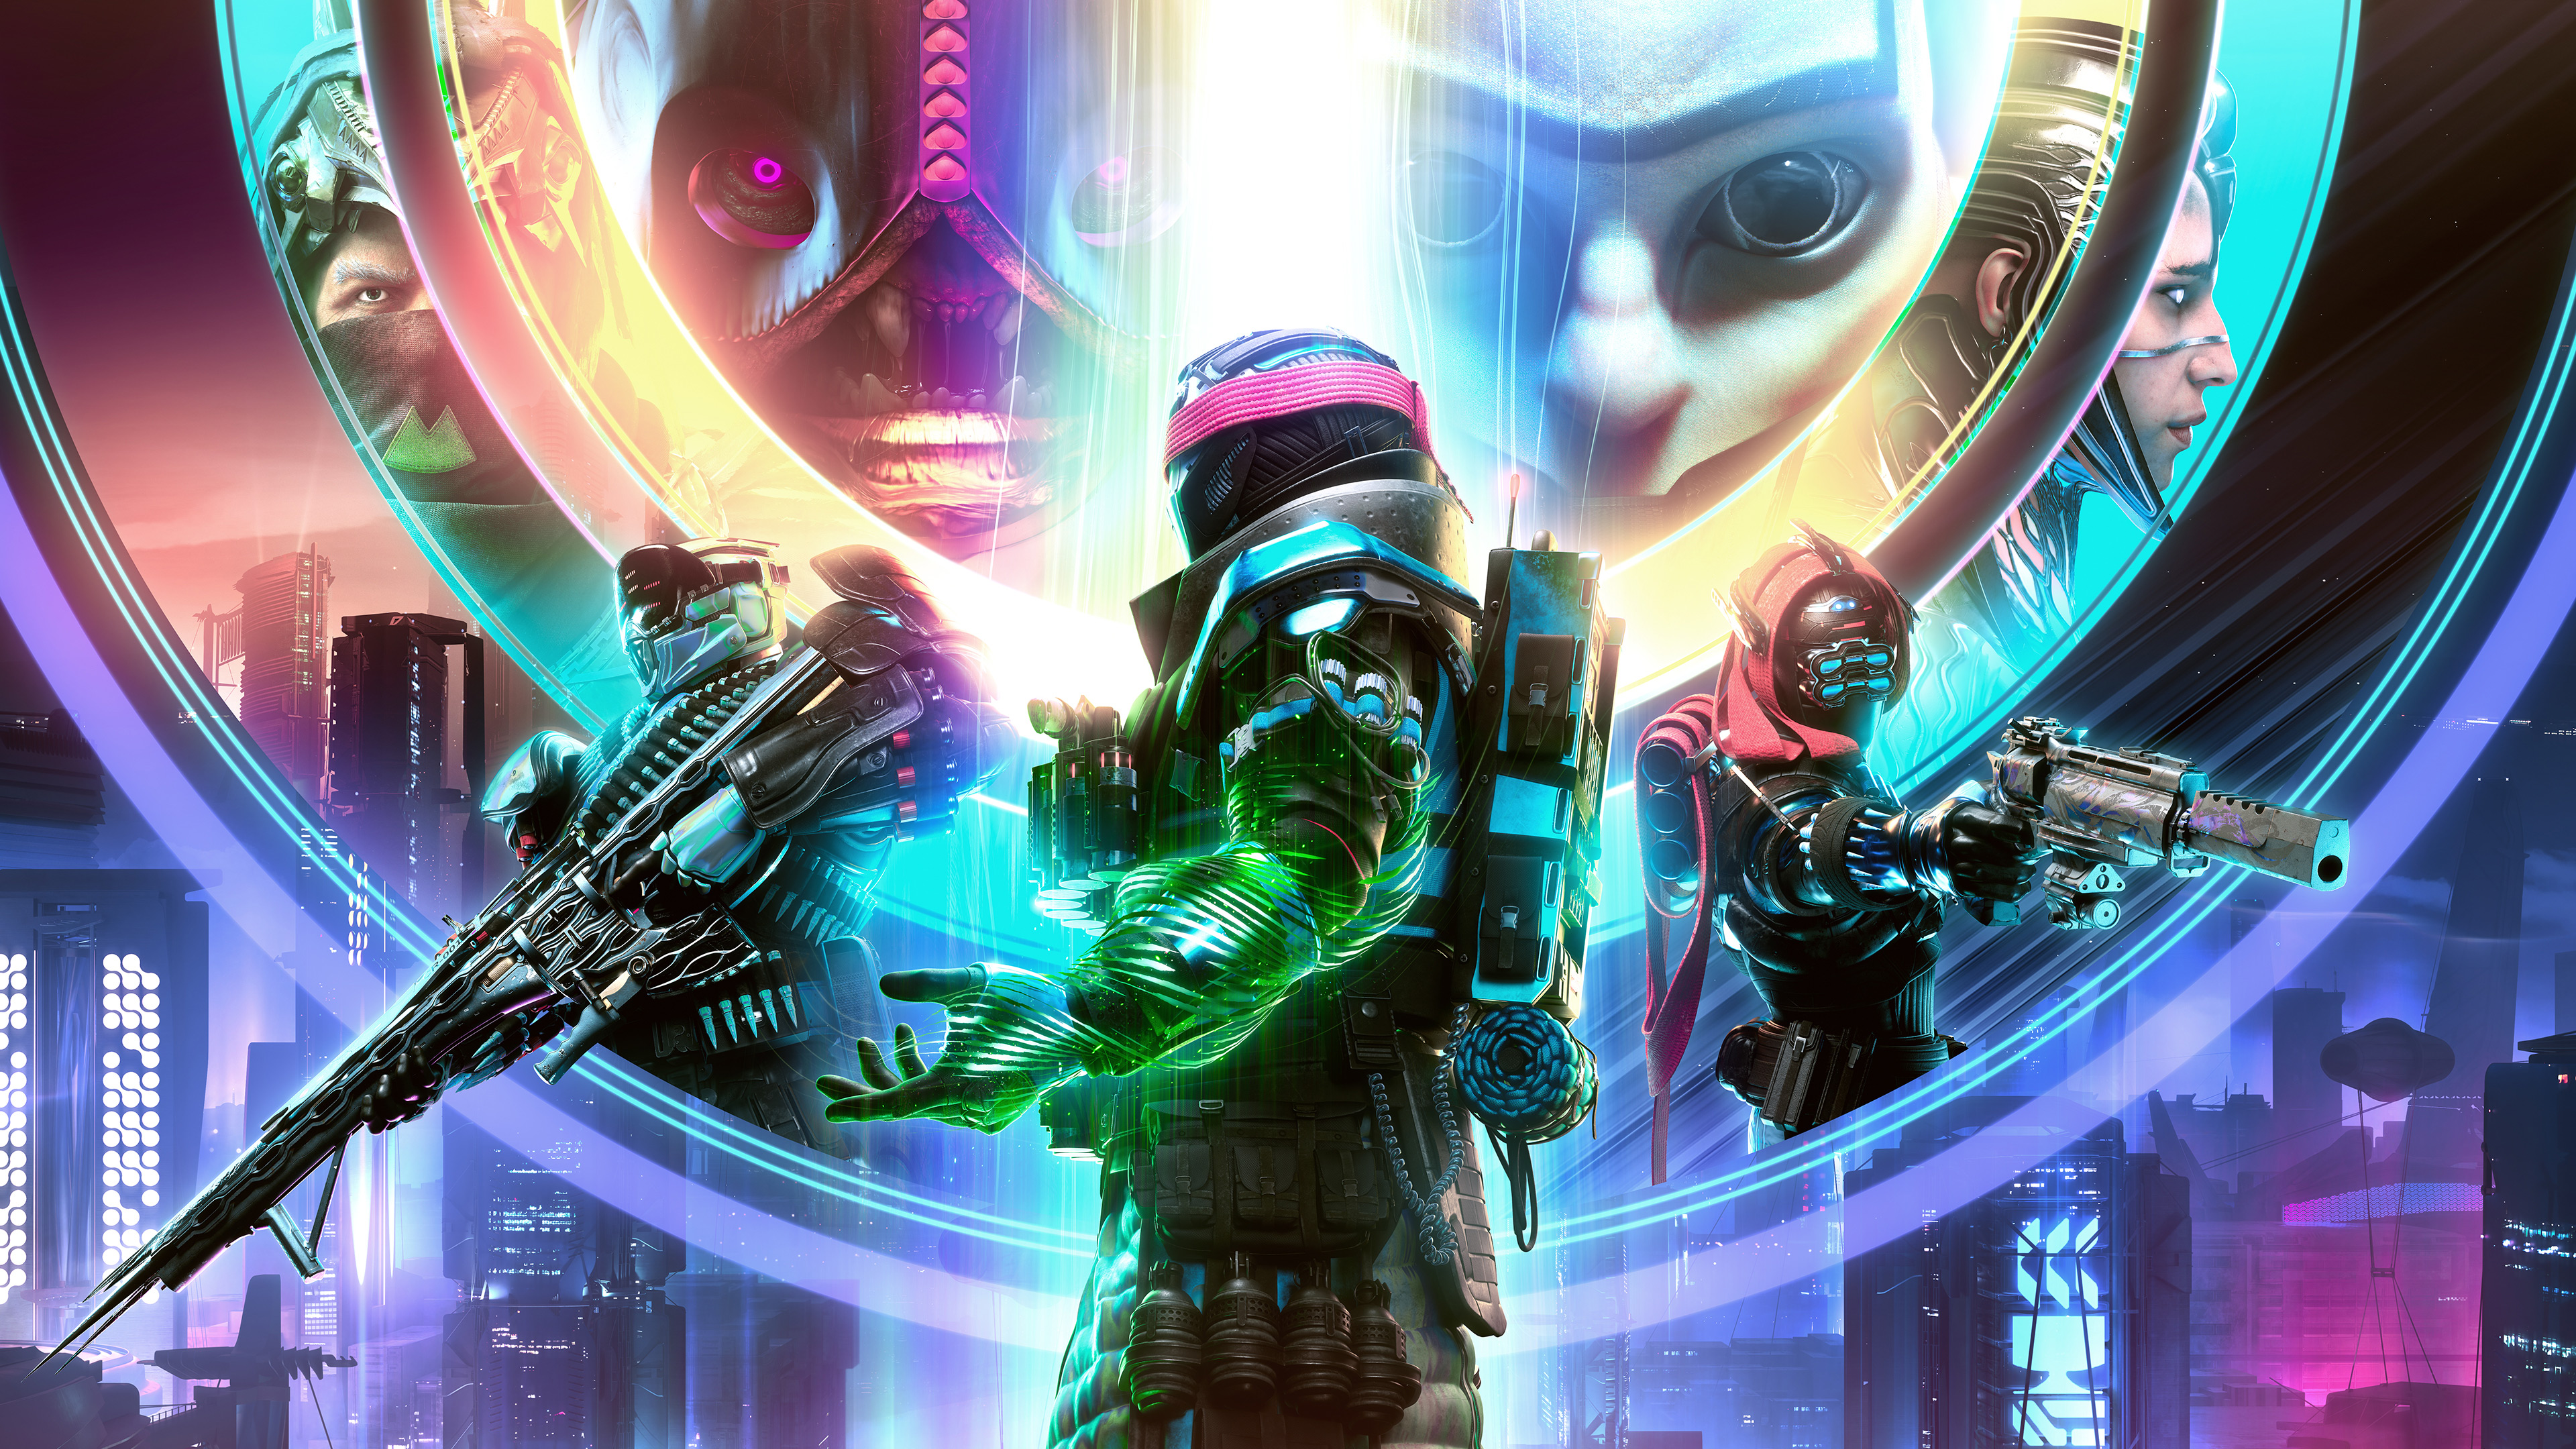 Destiny 2: Lightfall key art featuring three Guardians, The Witness, and Calus